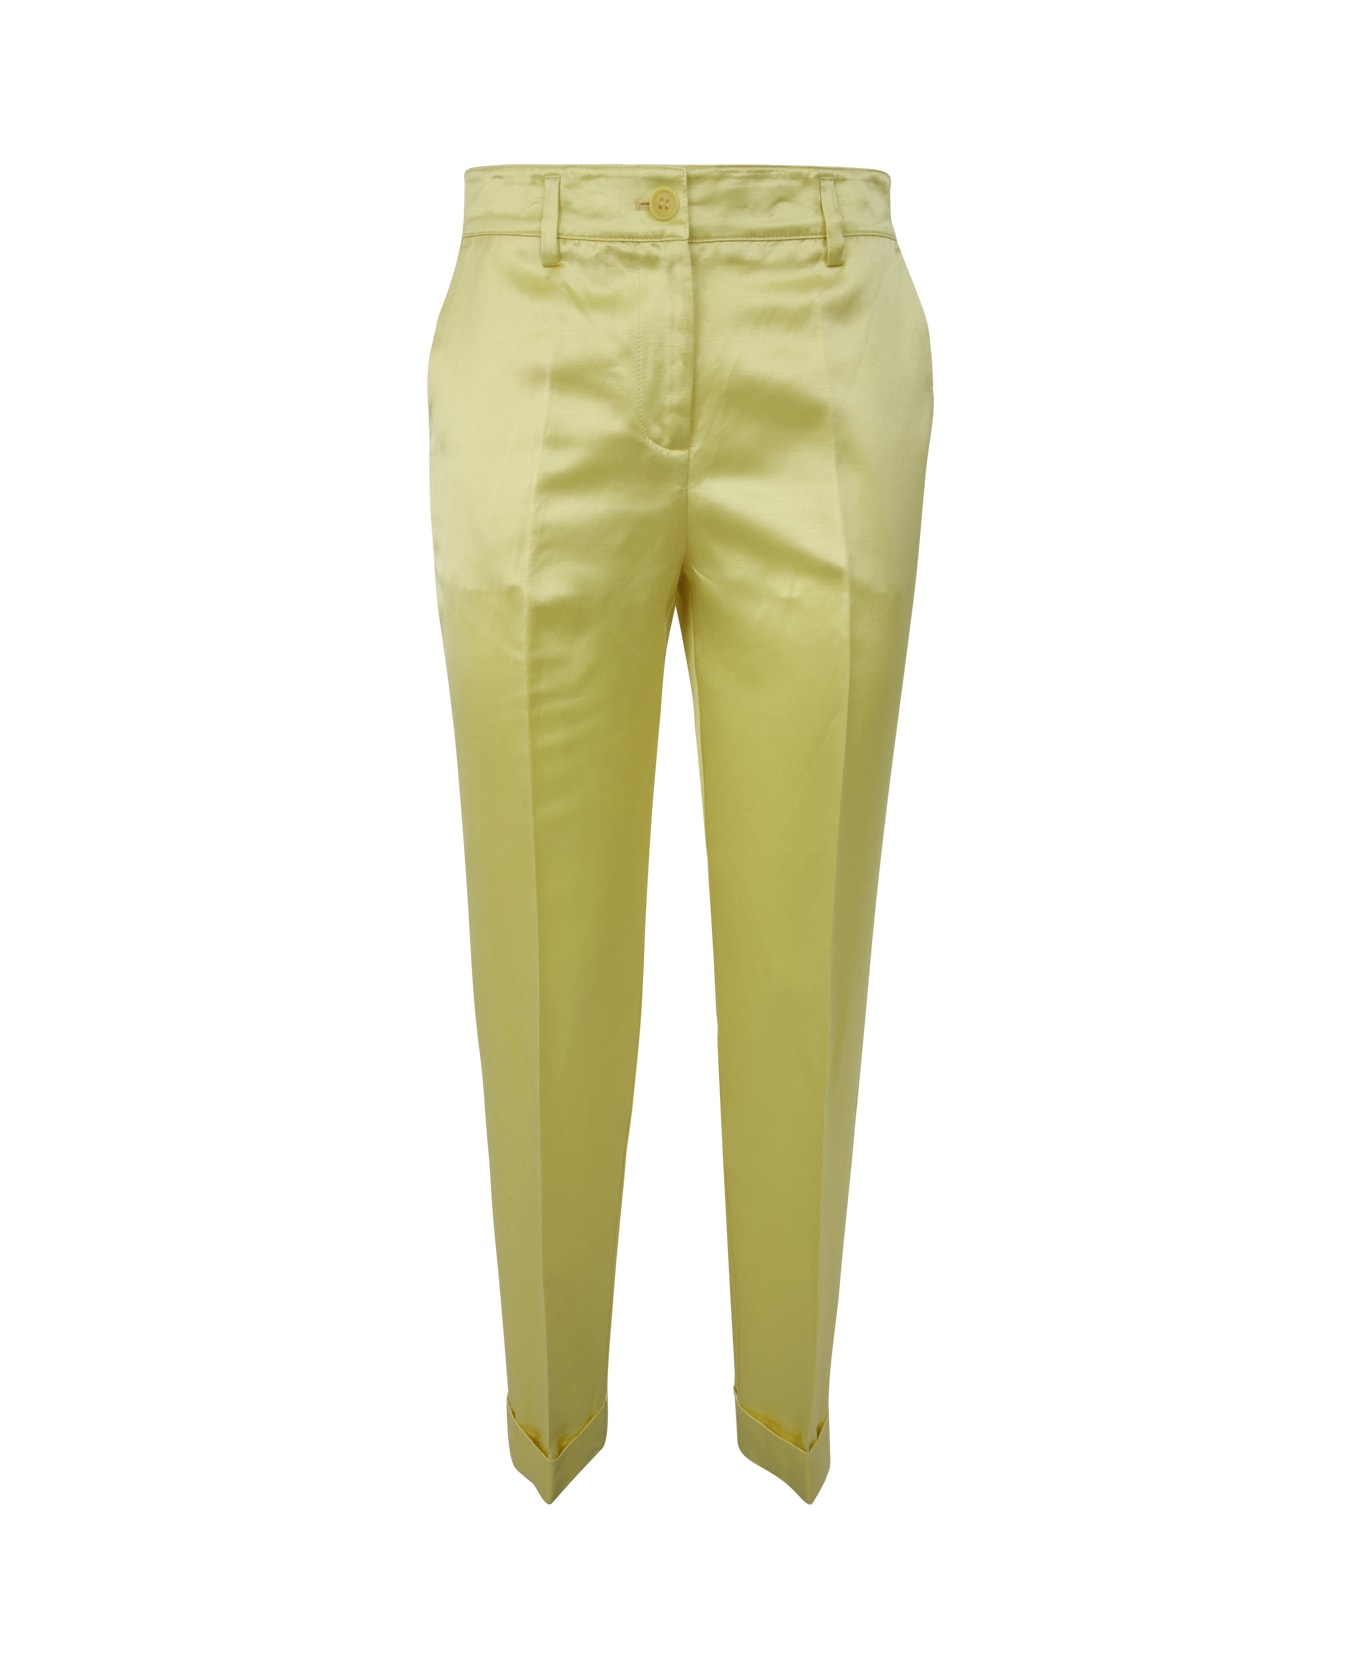 Parosh Satin, Viscose And Linen Trousers - Light Yellow ボトムス